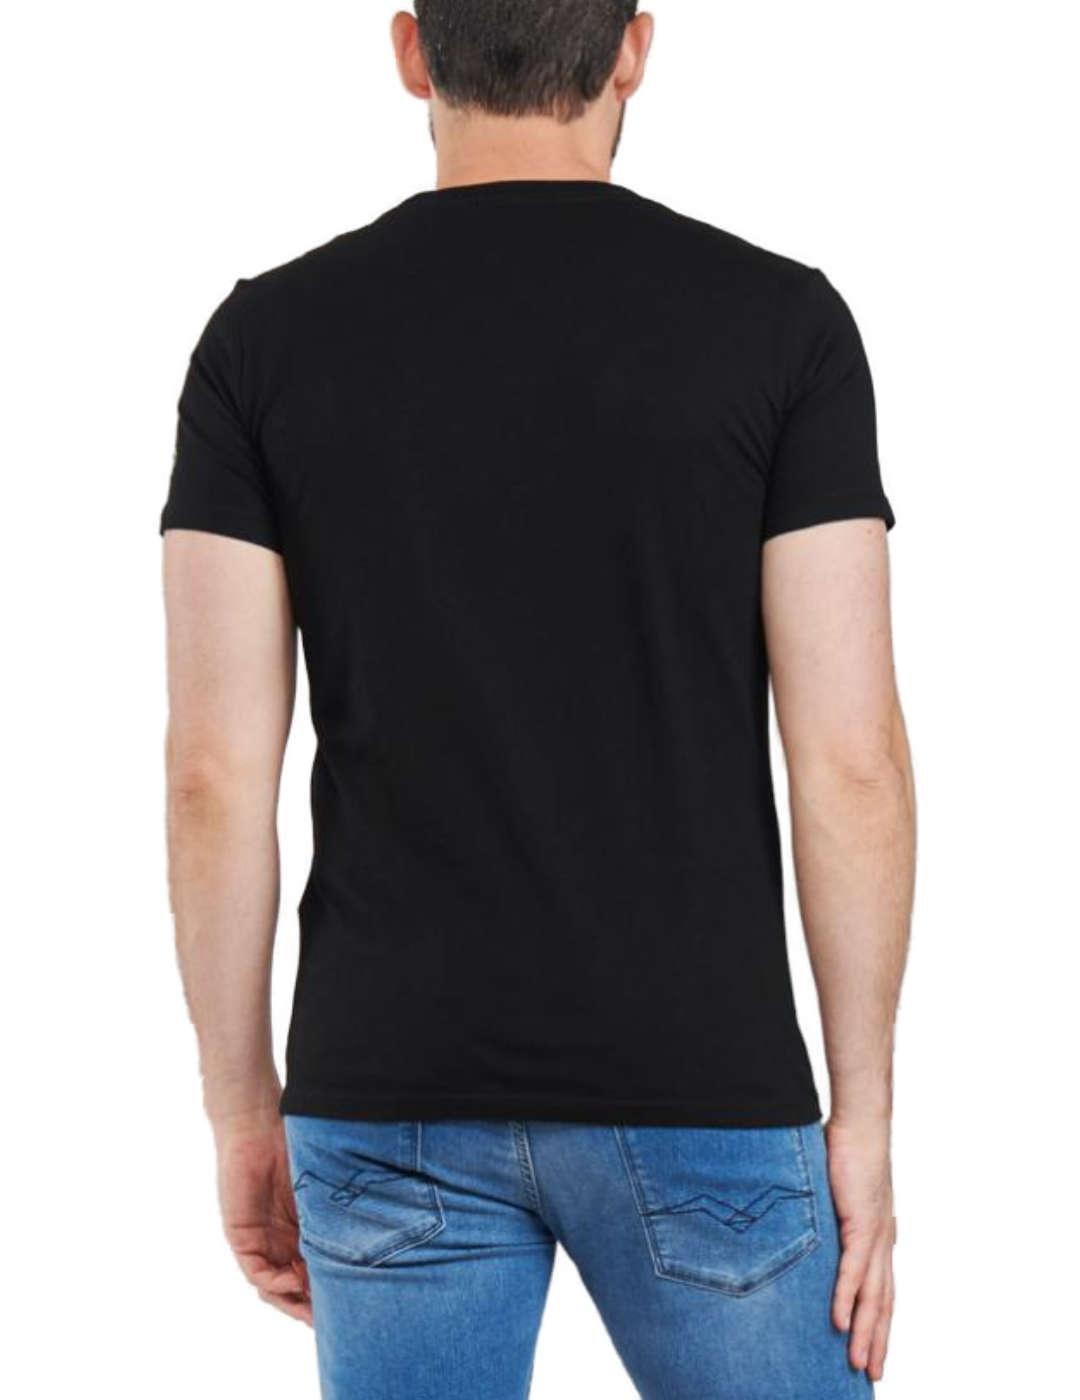 Camiseta Replay negro para hombre-z